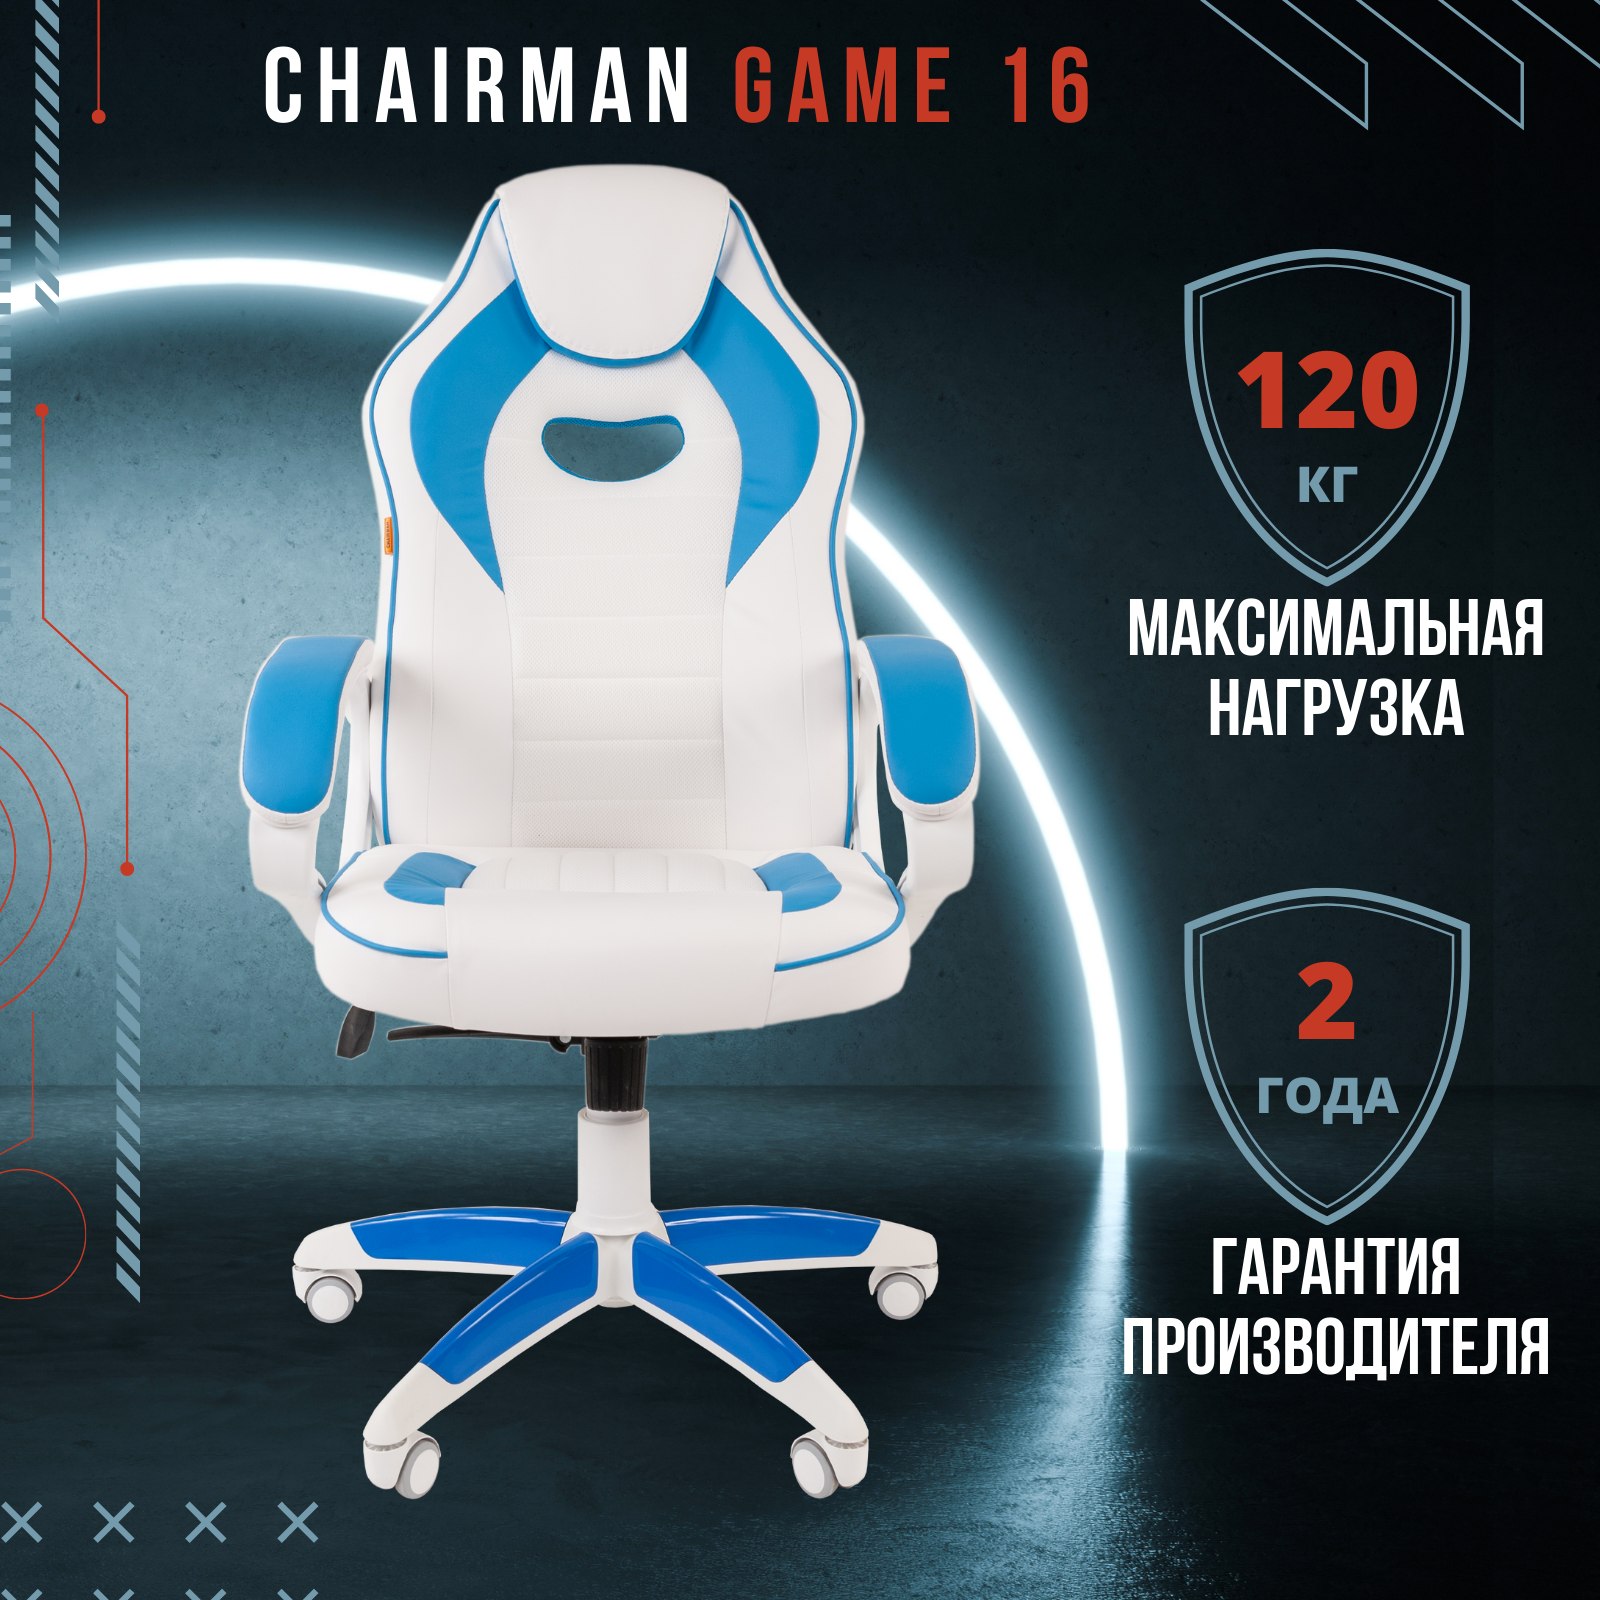 Chairman gaming 16